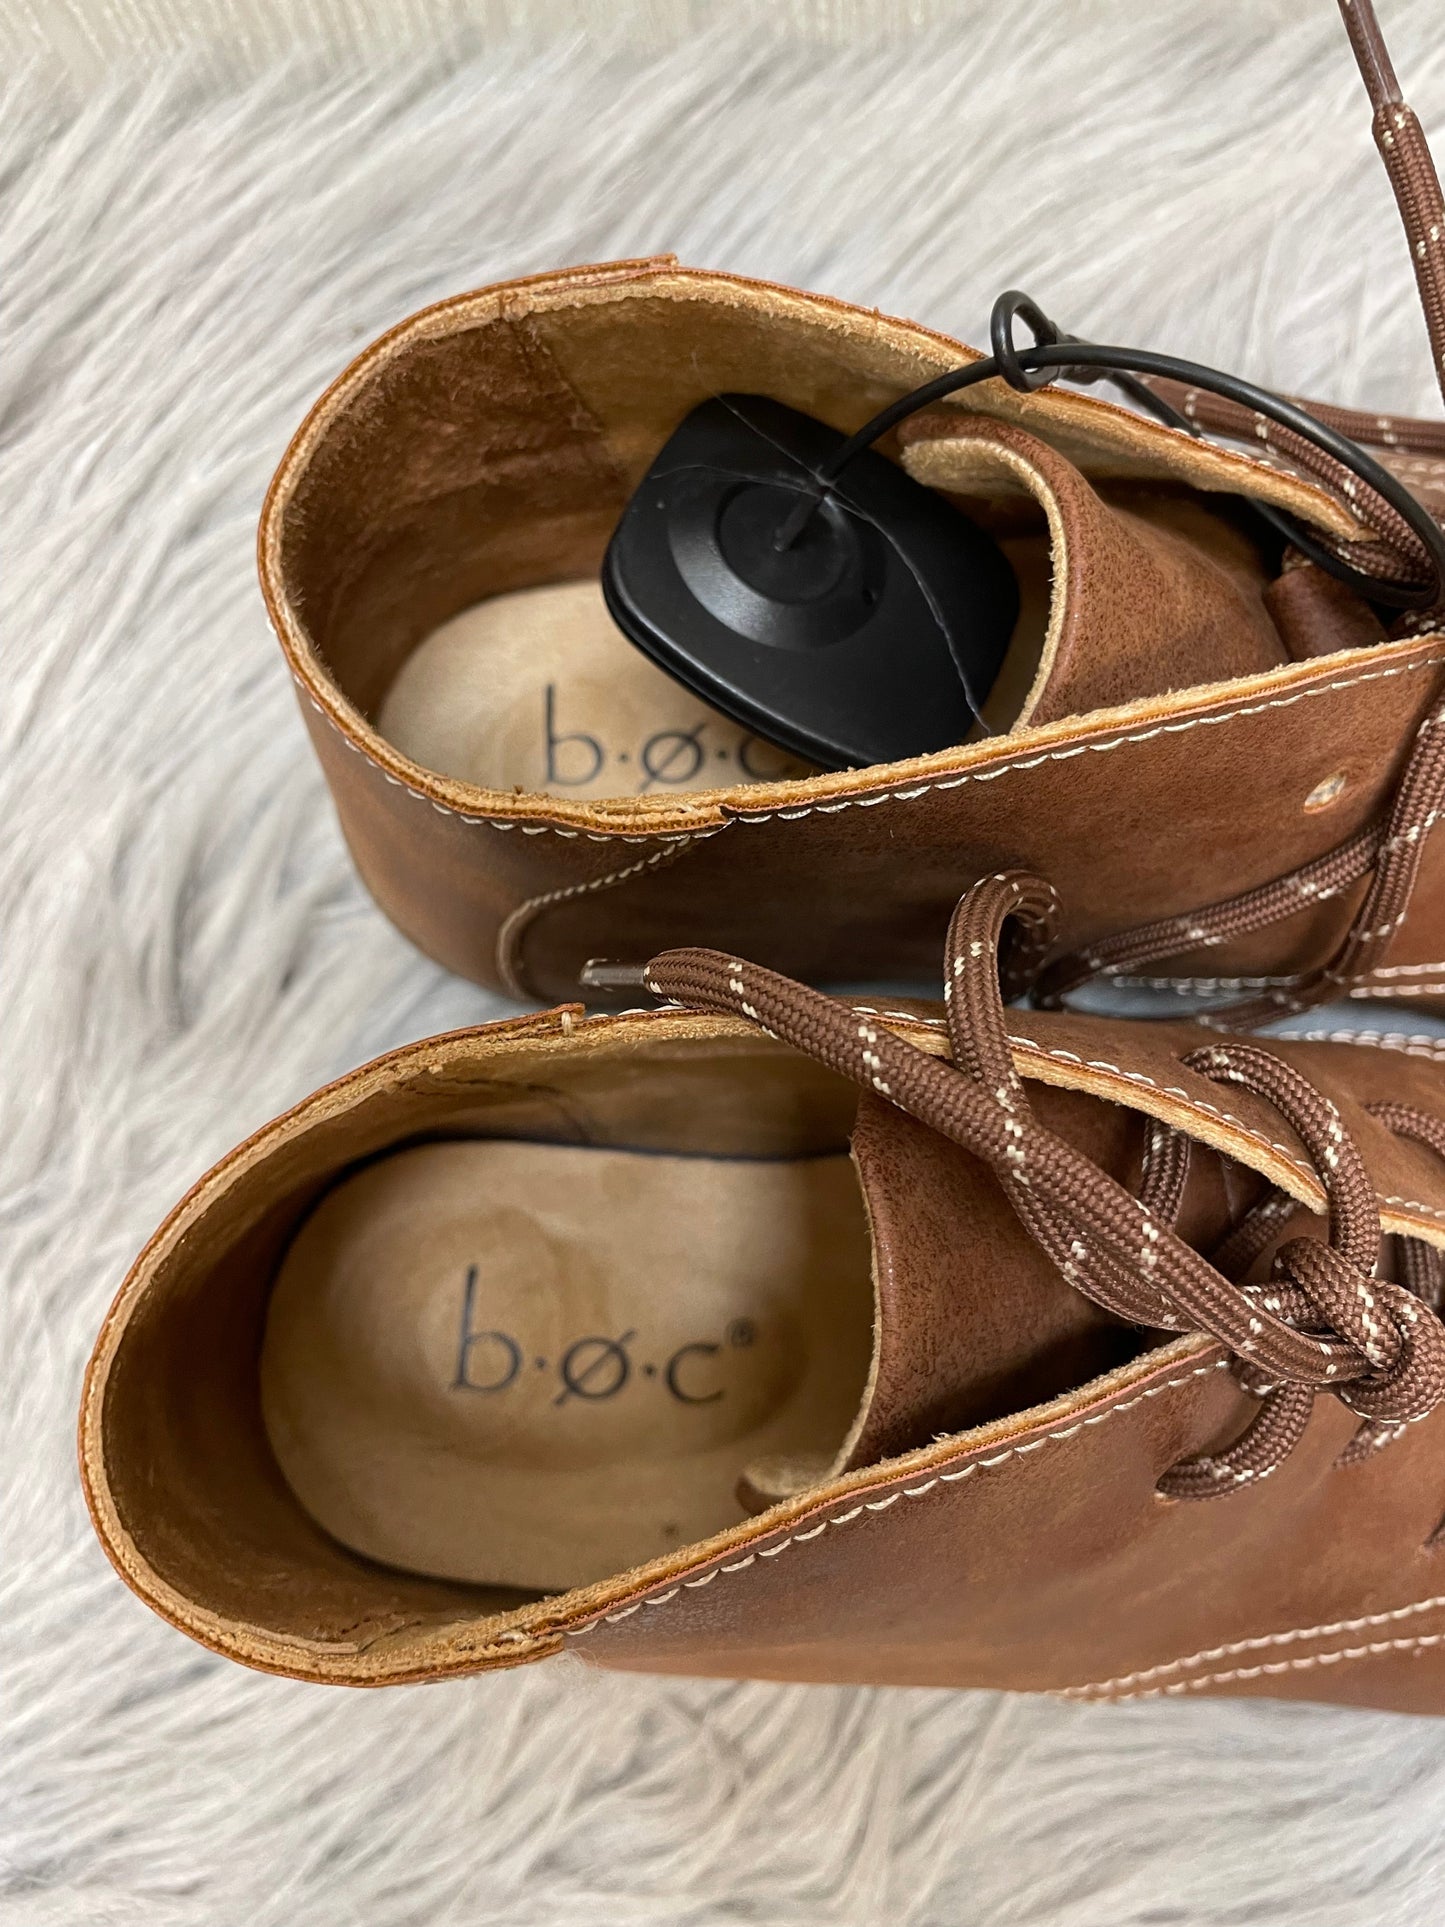 Shoes Flats By Boc  Size: 9.5